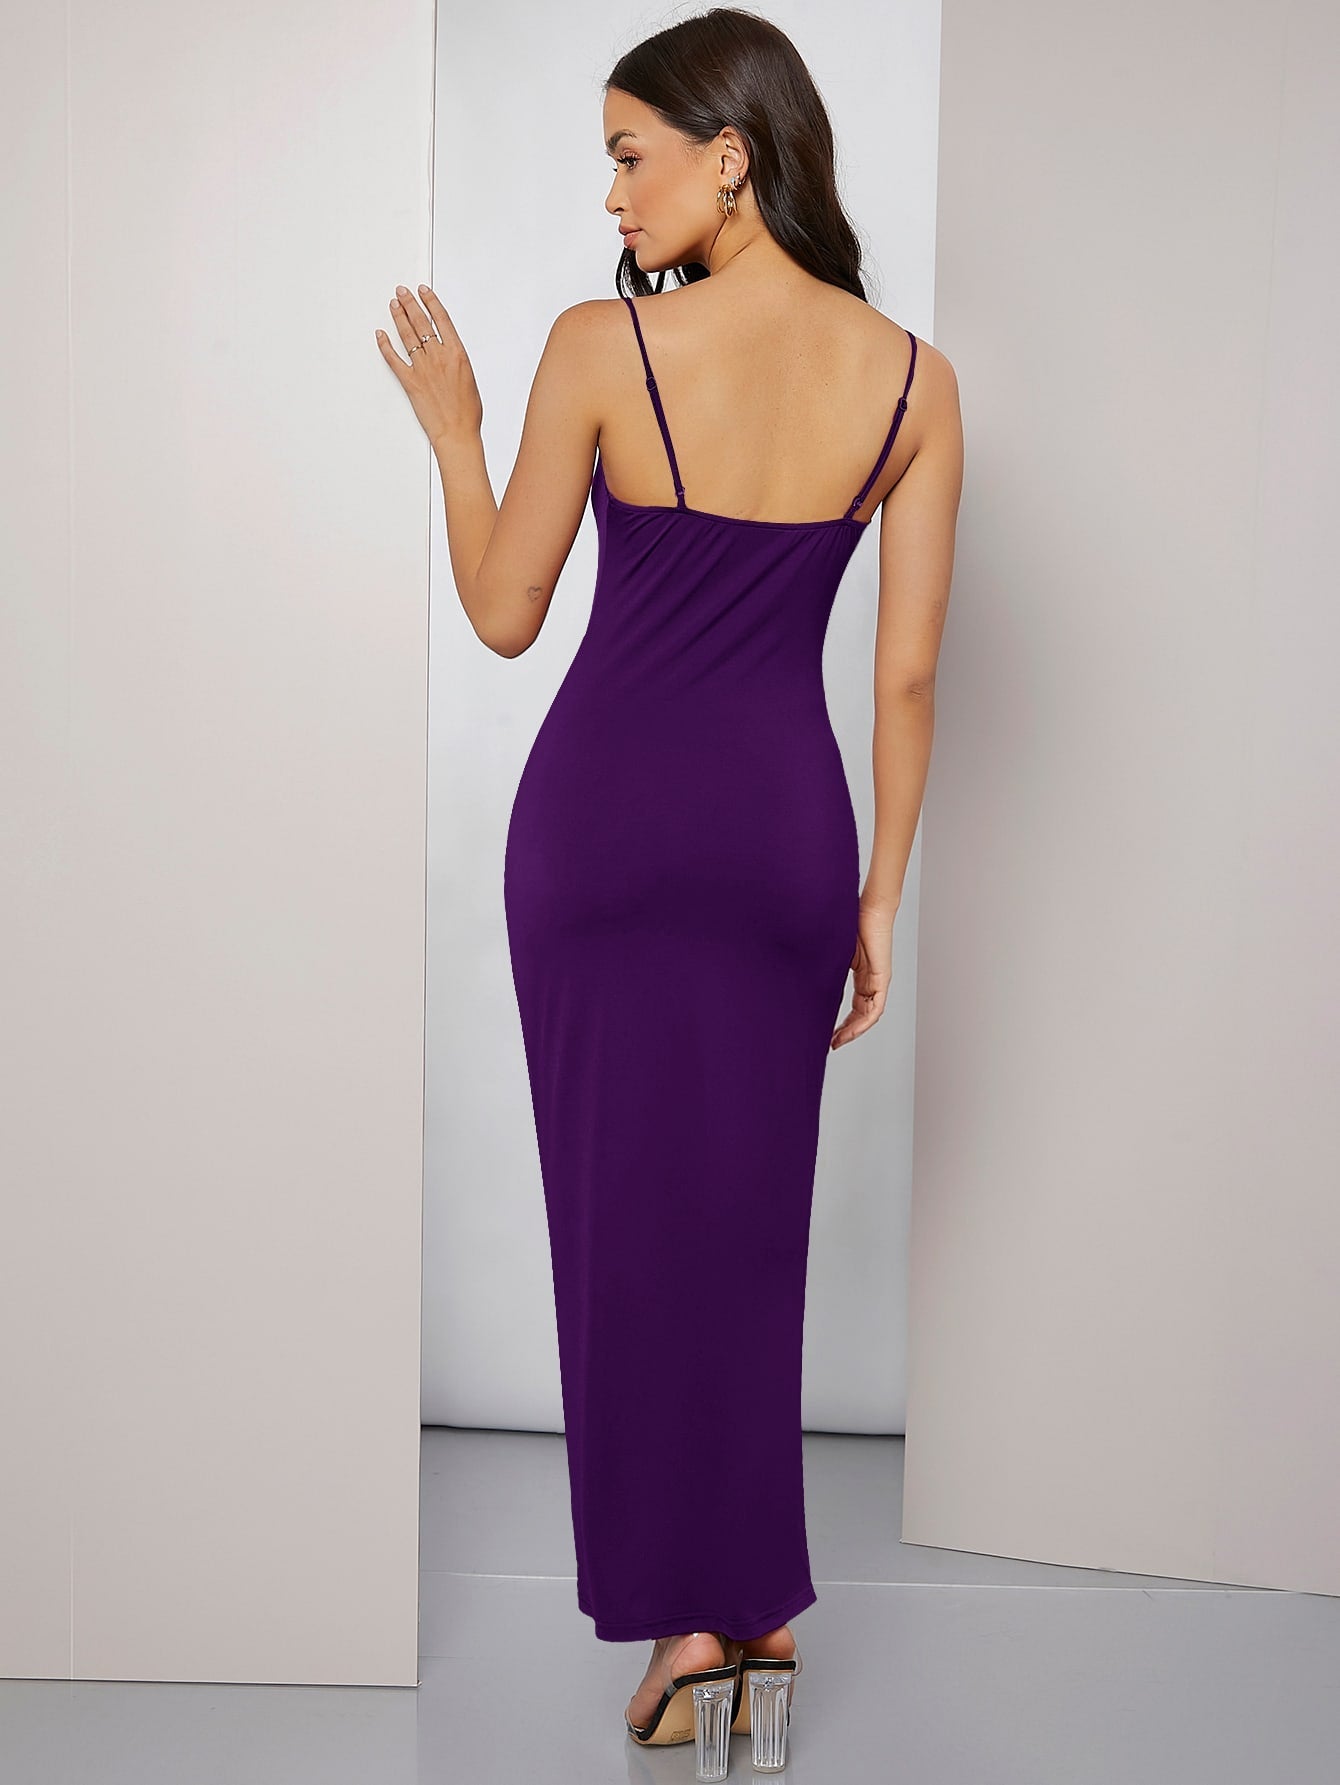 Cowl Neck Ruched Cami Dress Purple - Negative Apparel